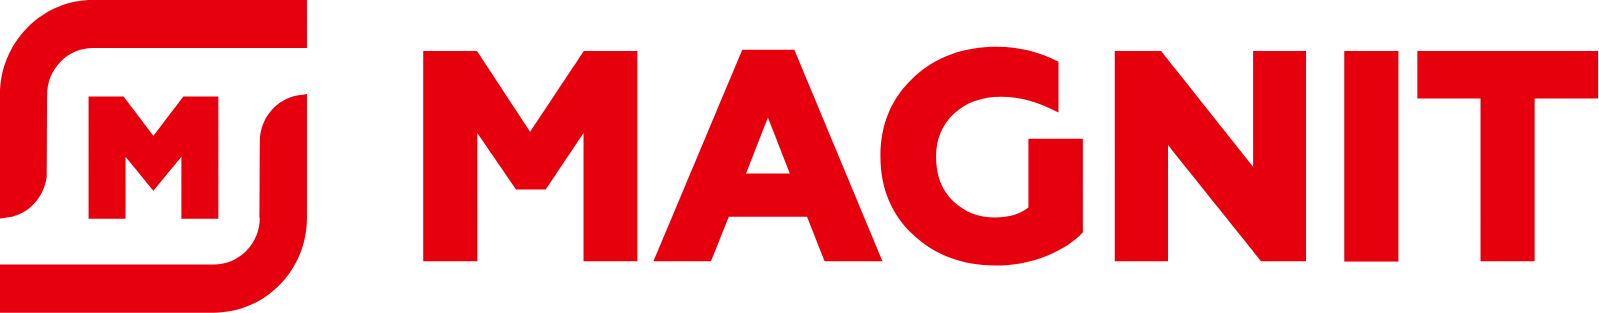 Magnit
 logo large (transparent PNG)